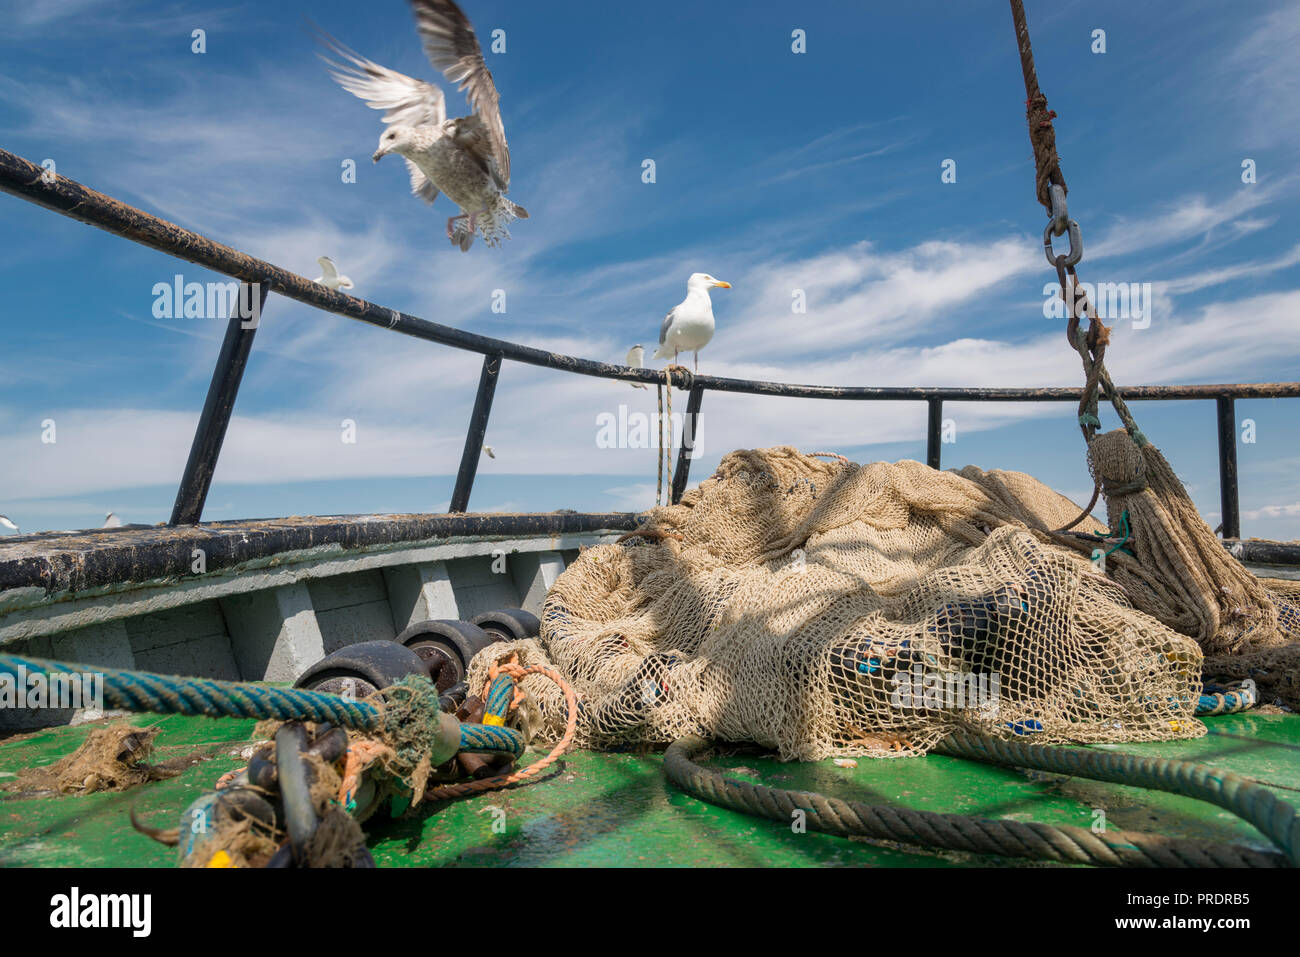 Seagulls following a shrimp trawler on the North Sea Stock Photo